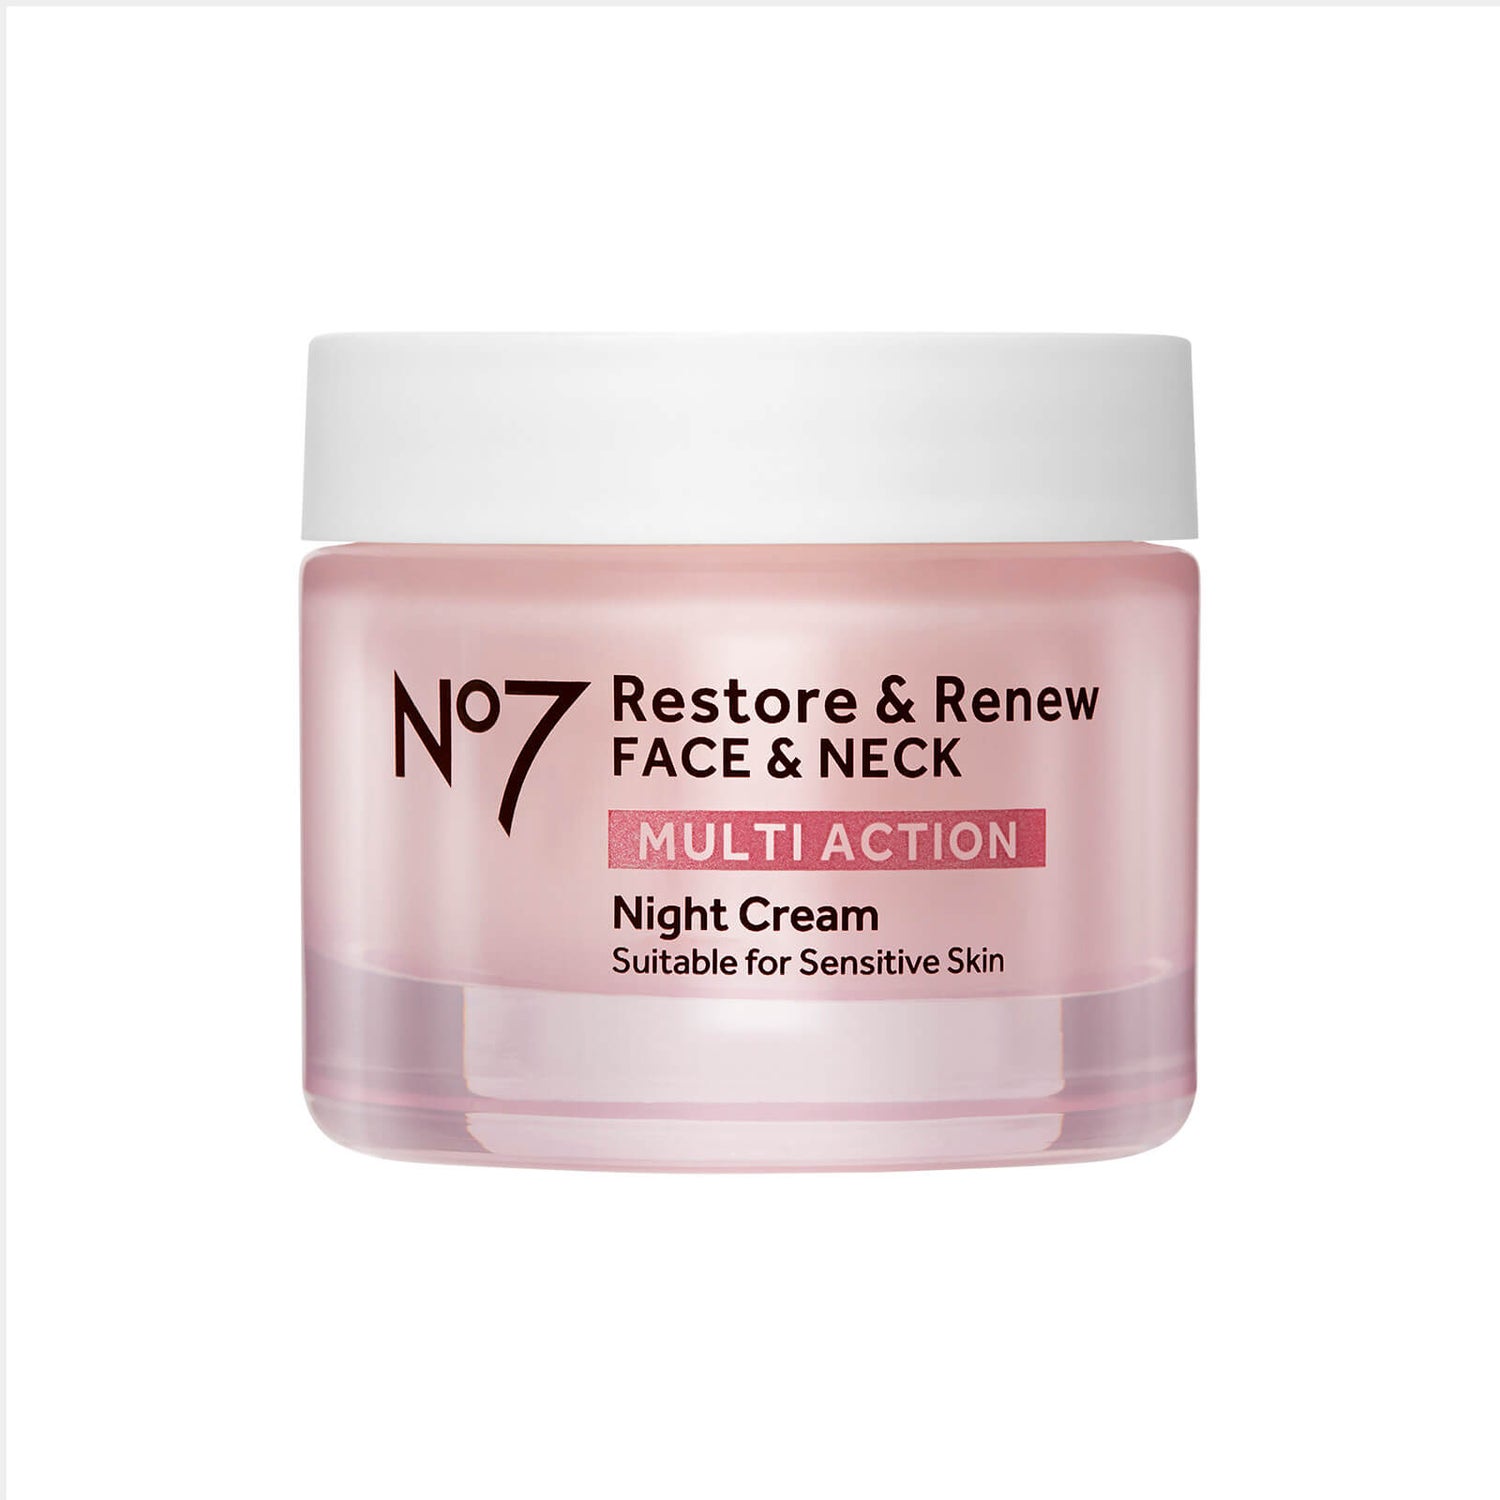 Restore & Renew FACE & NECK MULTI ACTION Night Cream 50ml